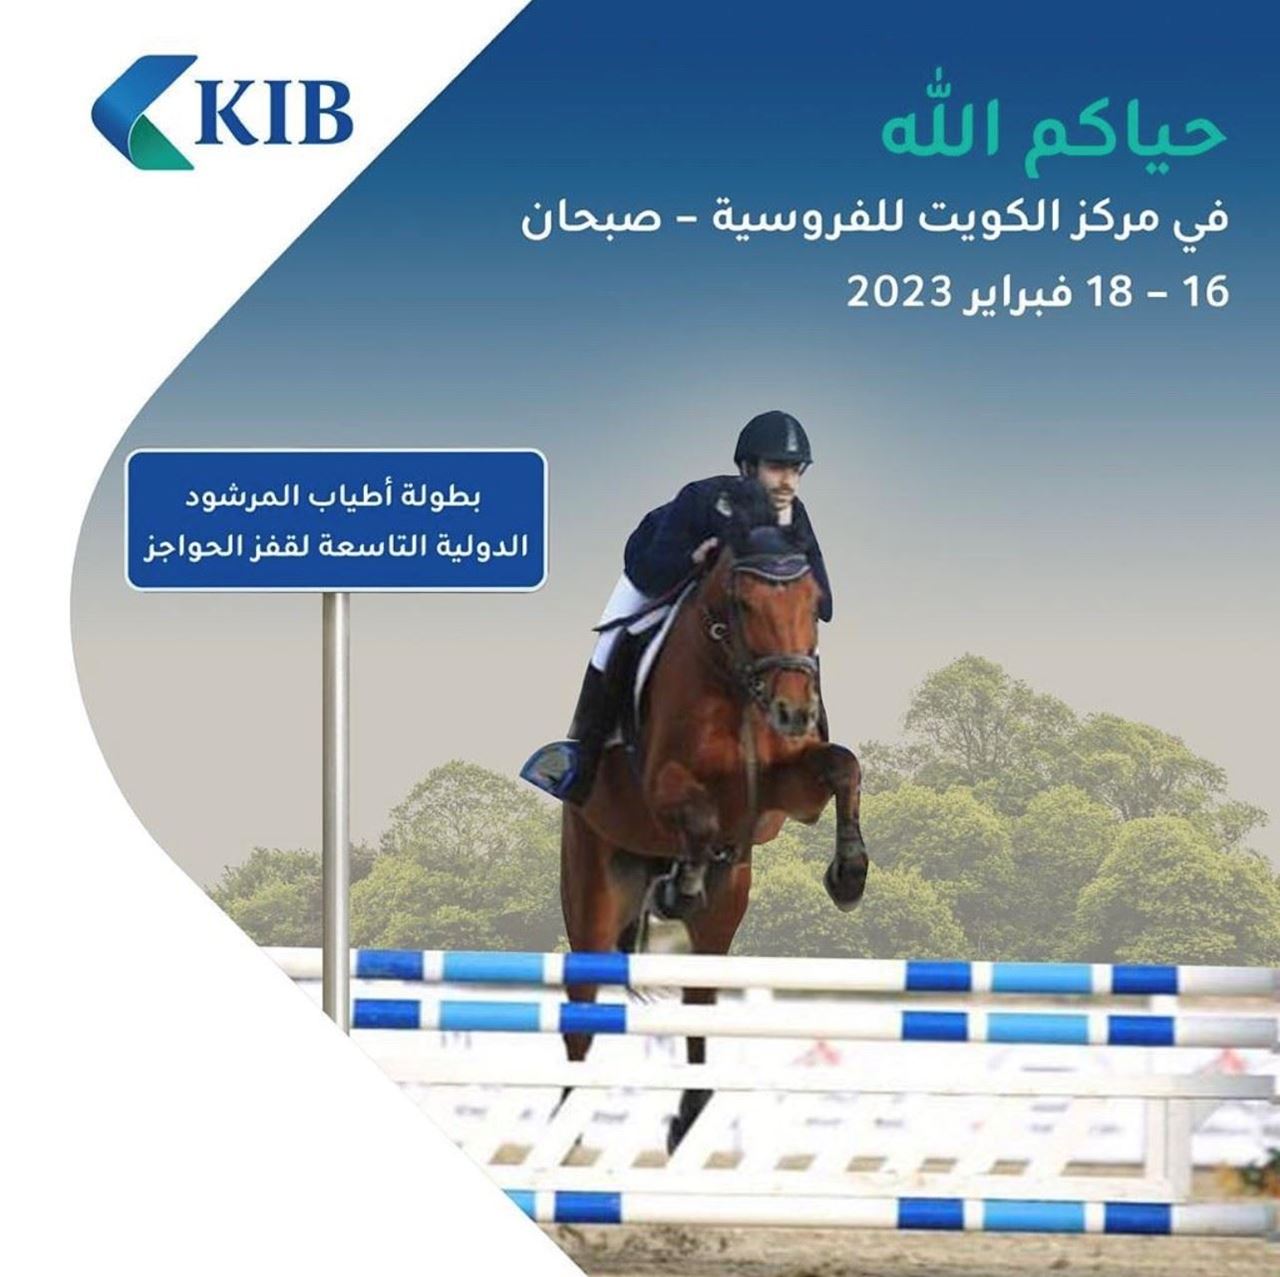 KIB Sponsors and Participates in the ninth Atyab Al Marshood Equestrian Championship